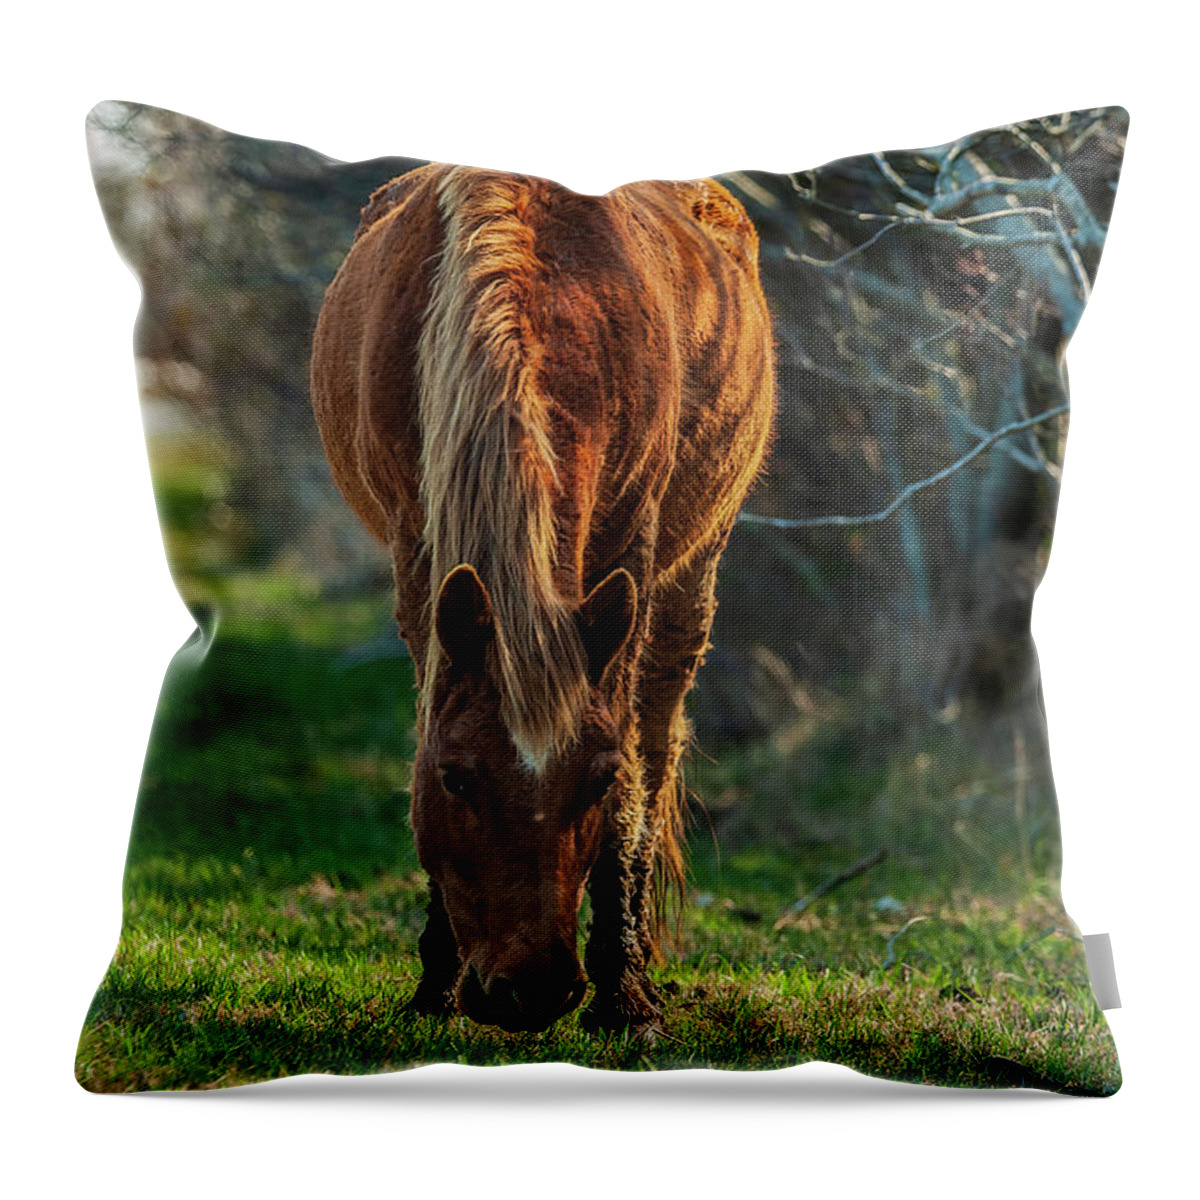 Assateague Ponies Throw Pillow featuring the photograph Assateague Pony by Louis Dallara